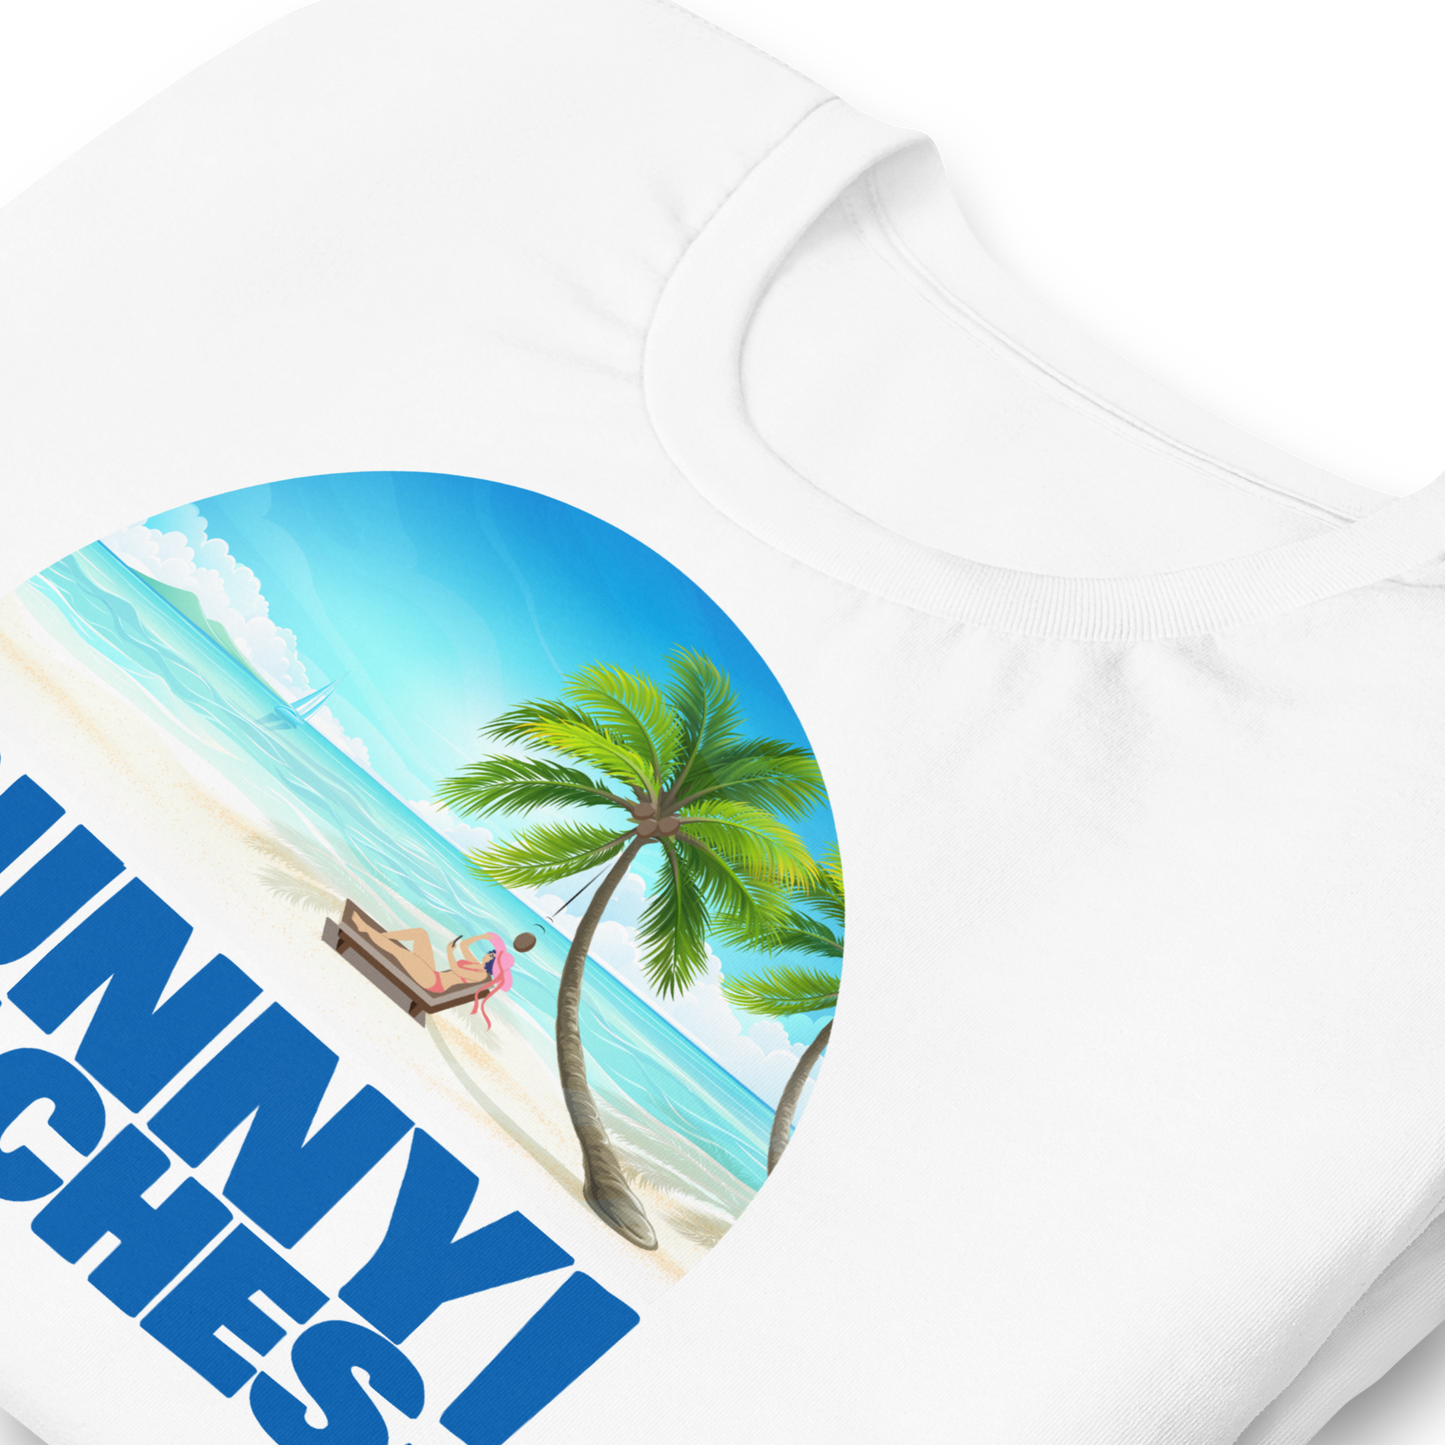 Unisex - Sunny Beaches! - Funny T-shirt